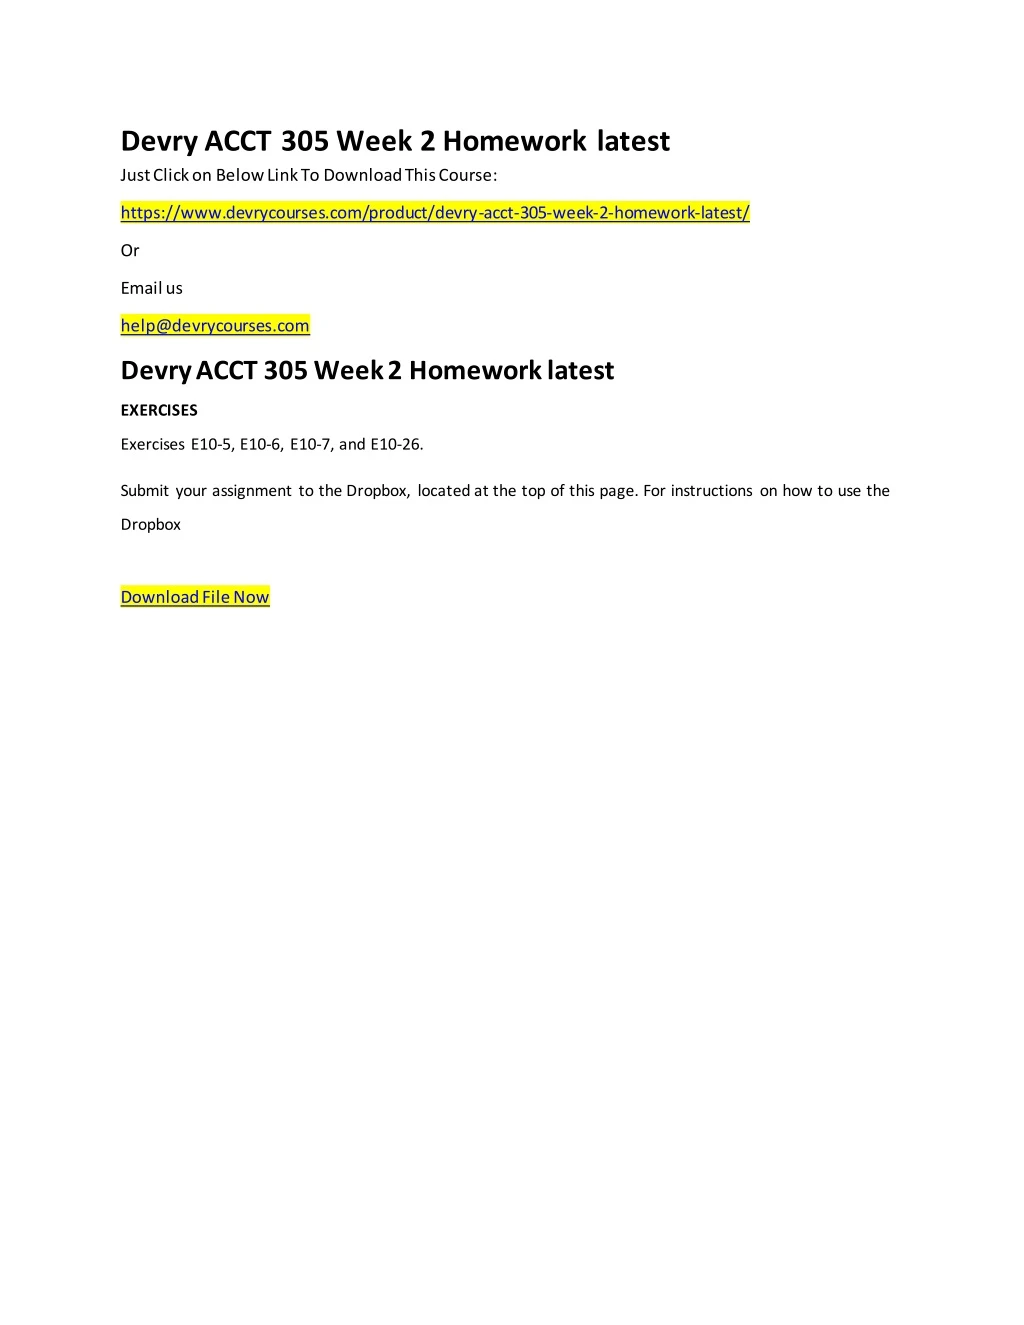 devry acct 305 week 2 homework latest just click